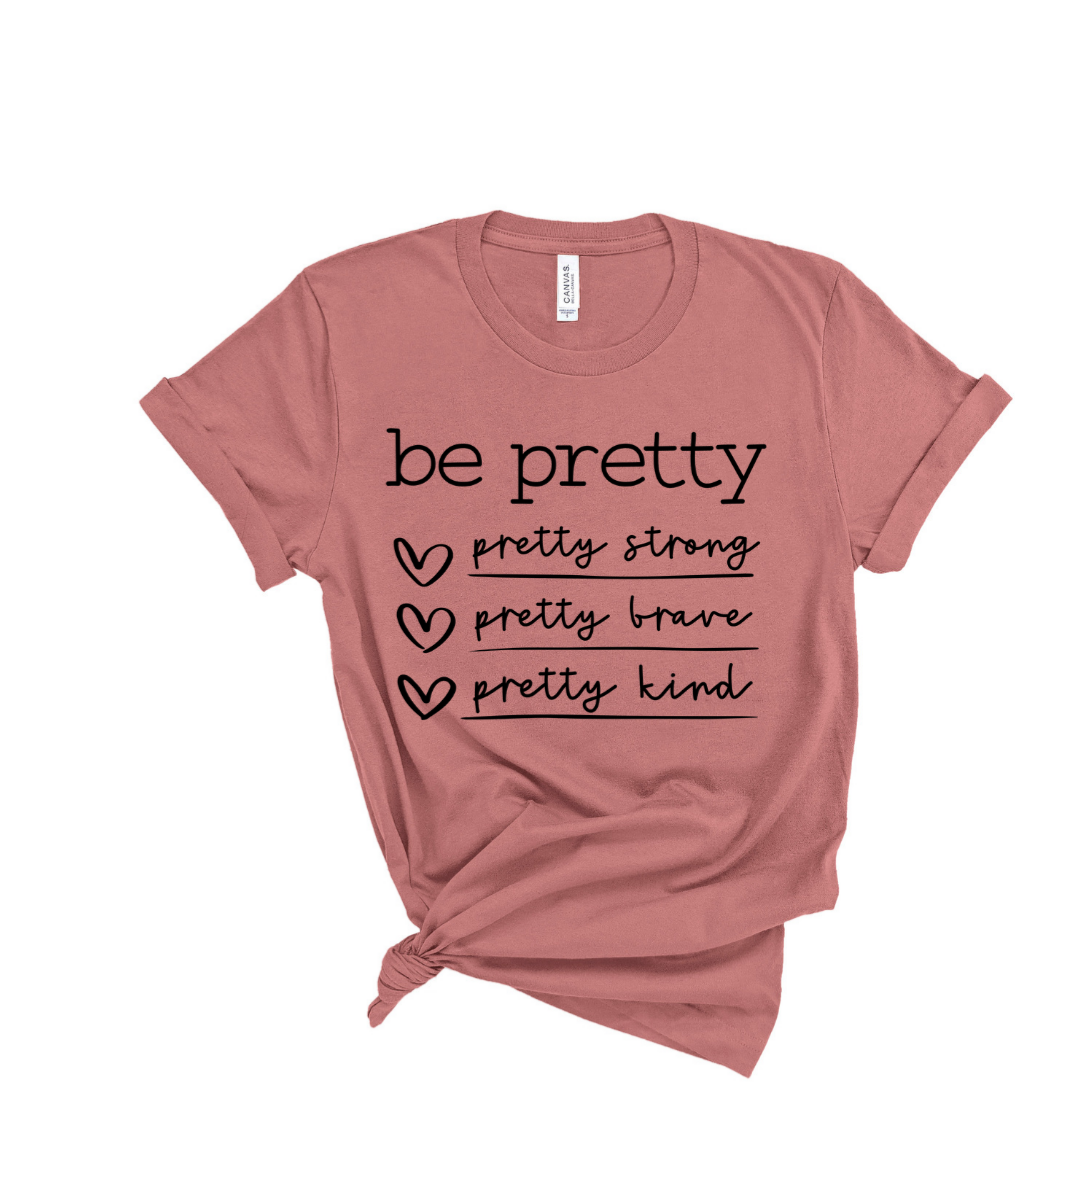 Be pretty t shirt - 4 little hearts